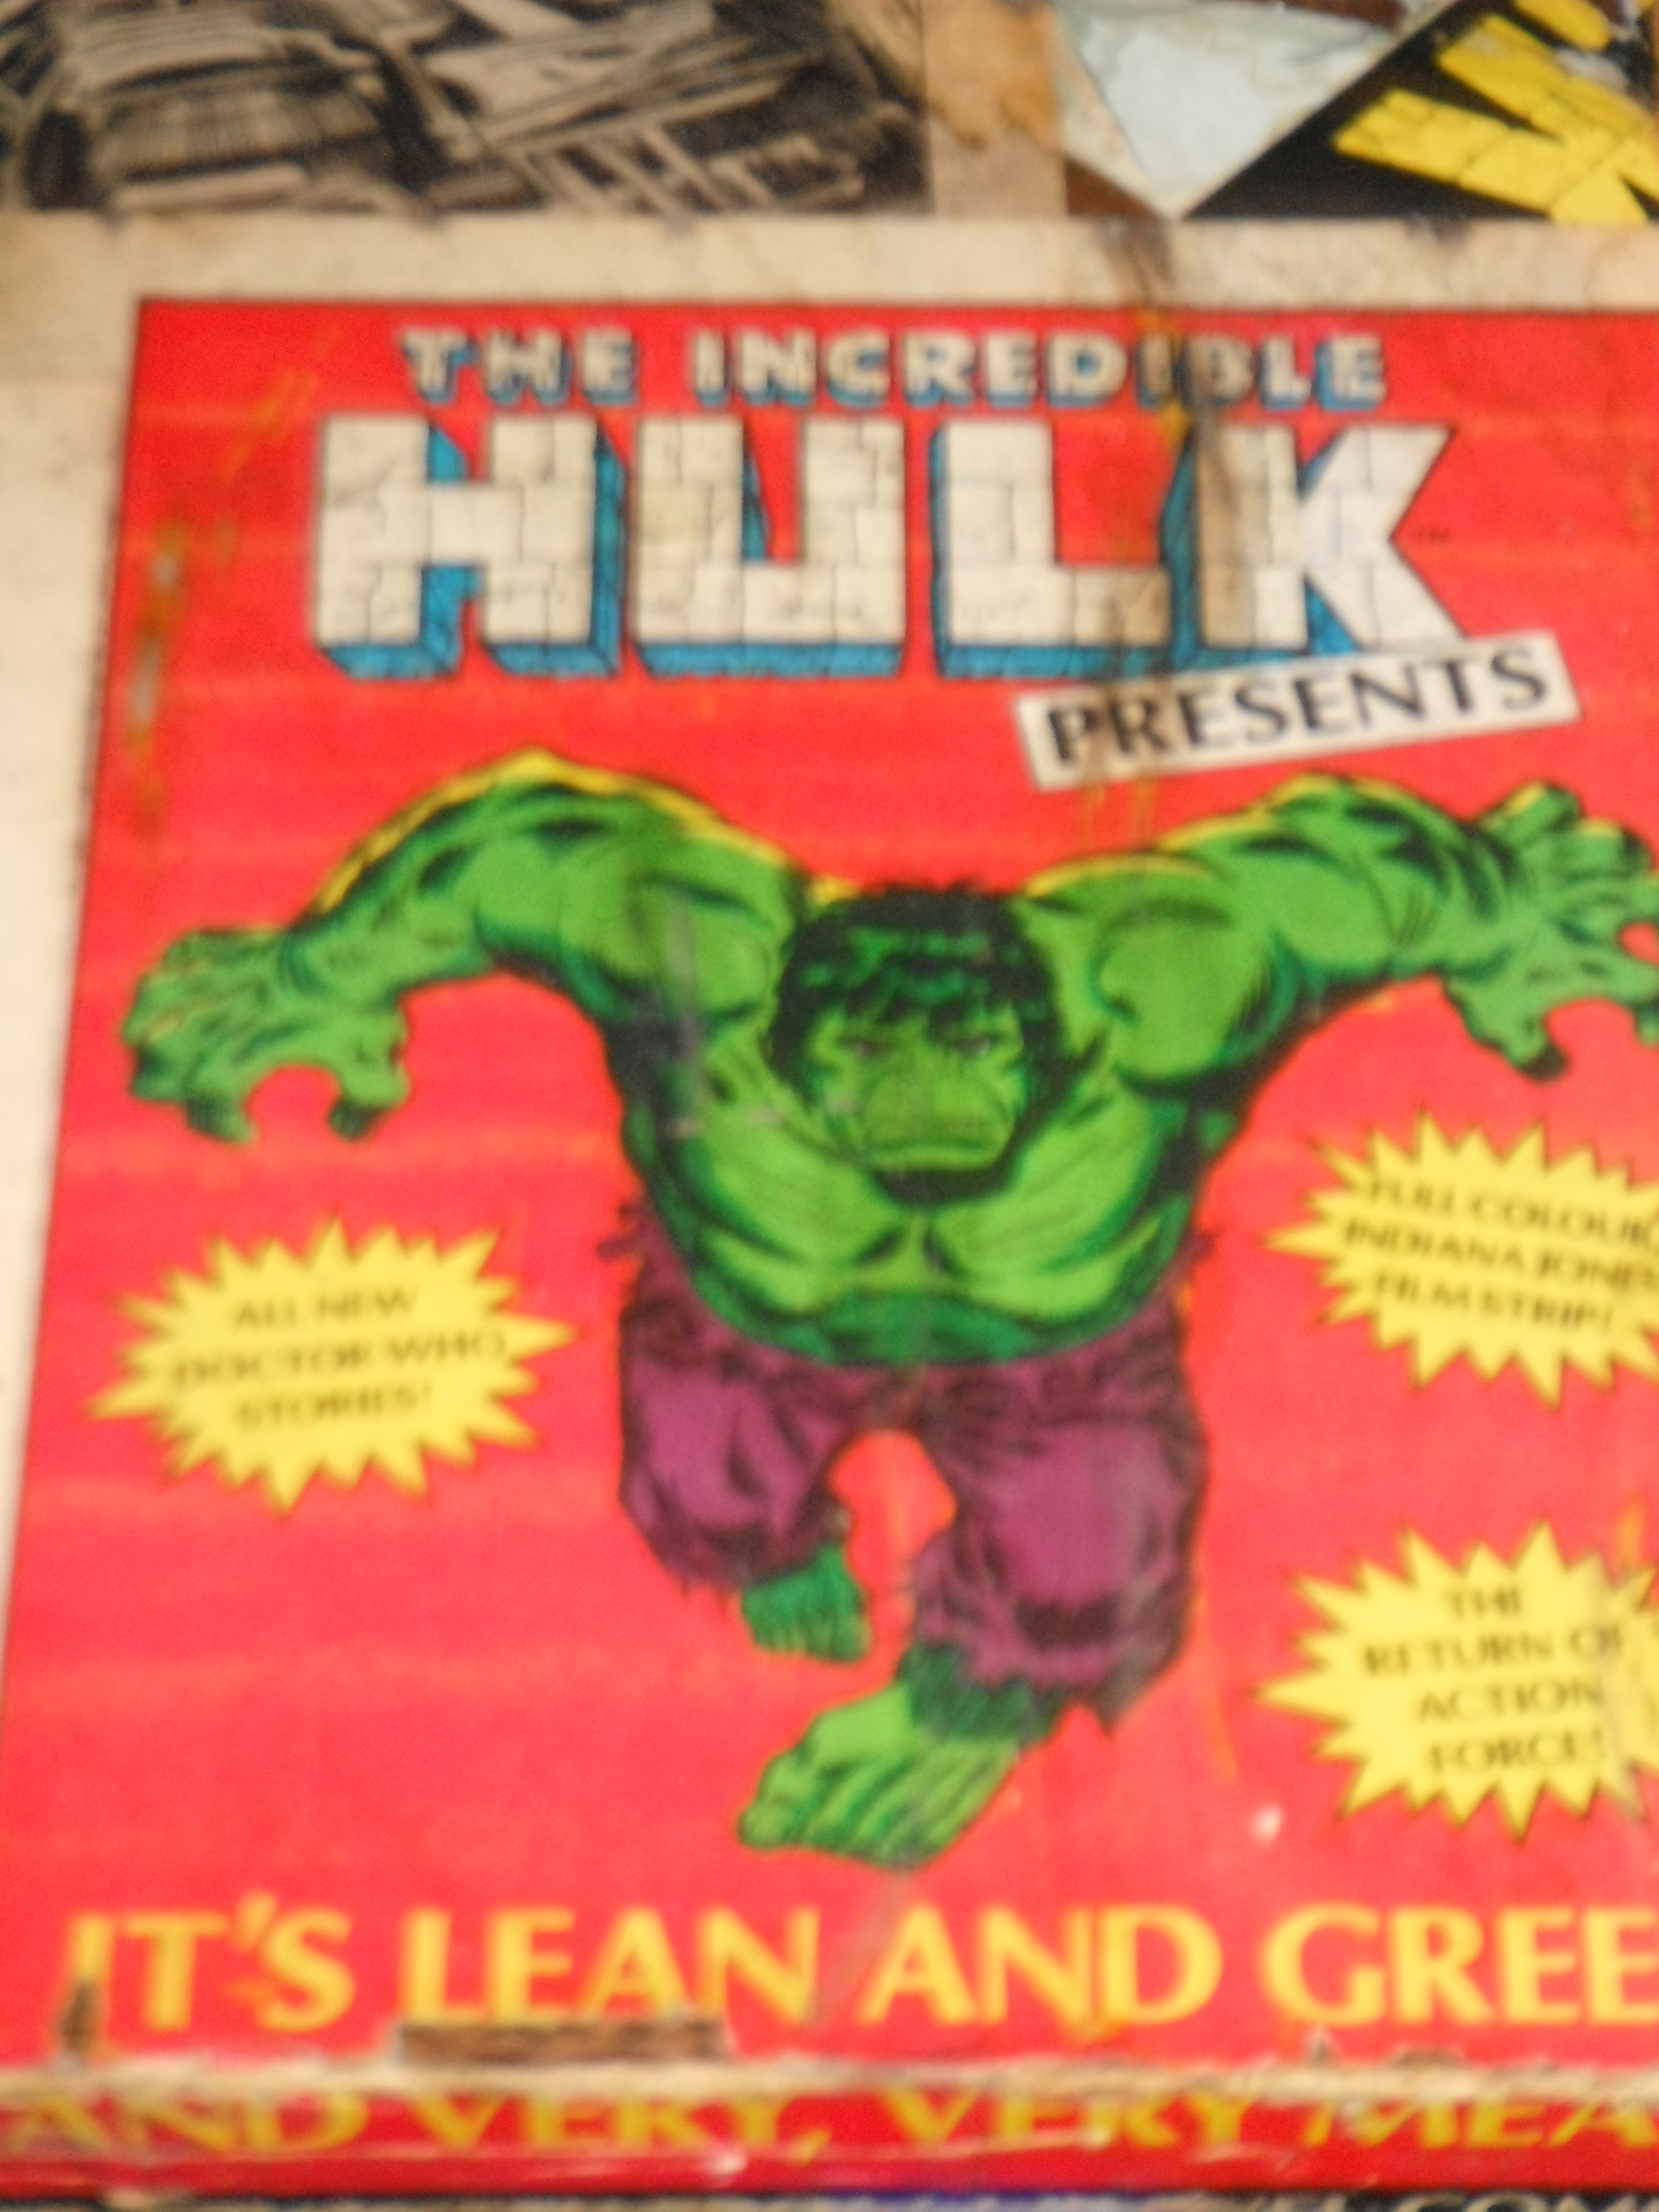 Photo taken by me – Hulk Comic cover – FAB Café, Manchester